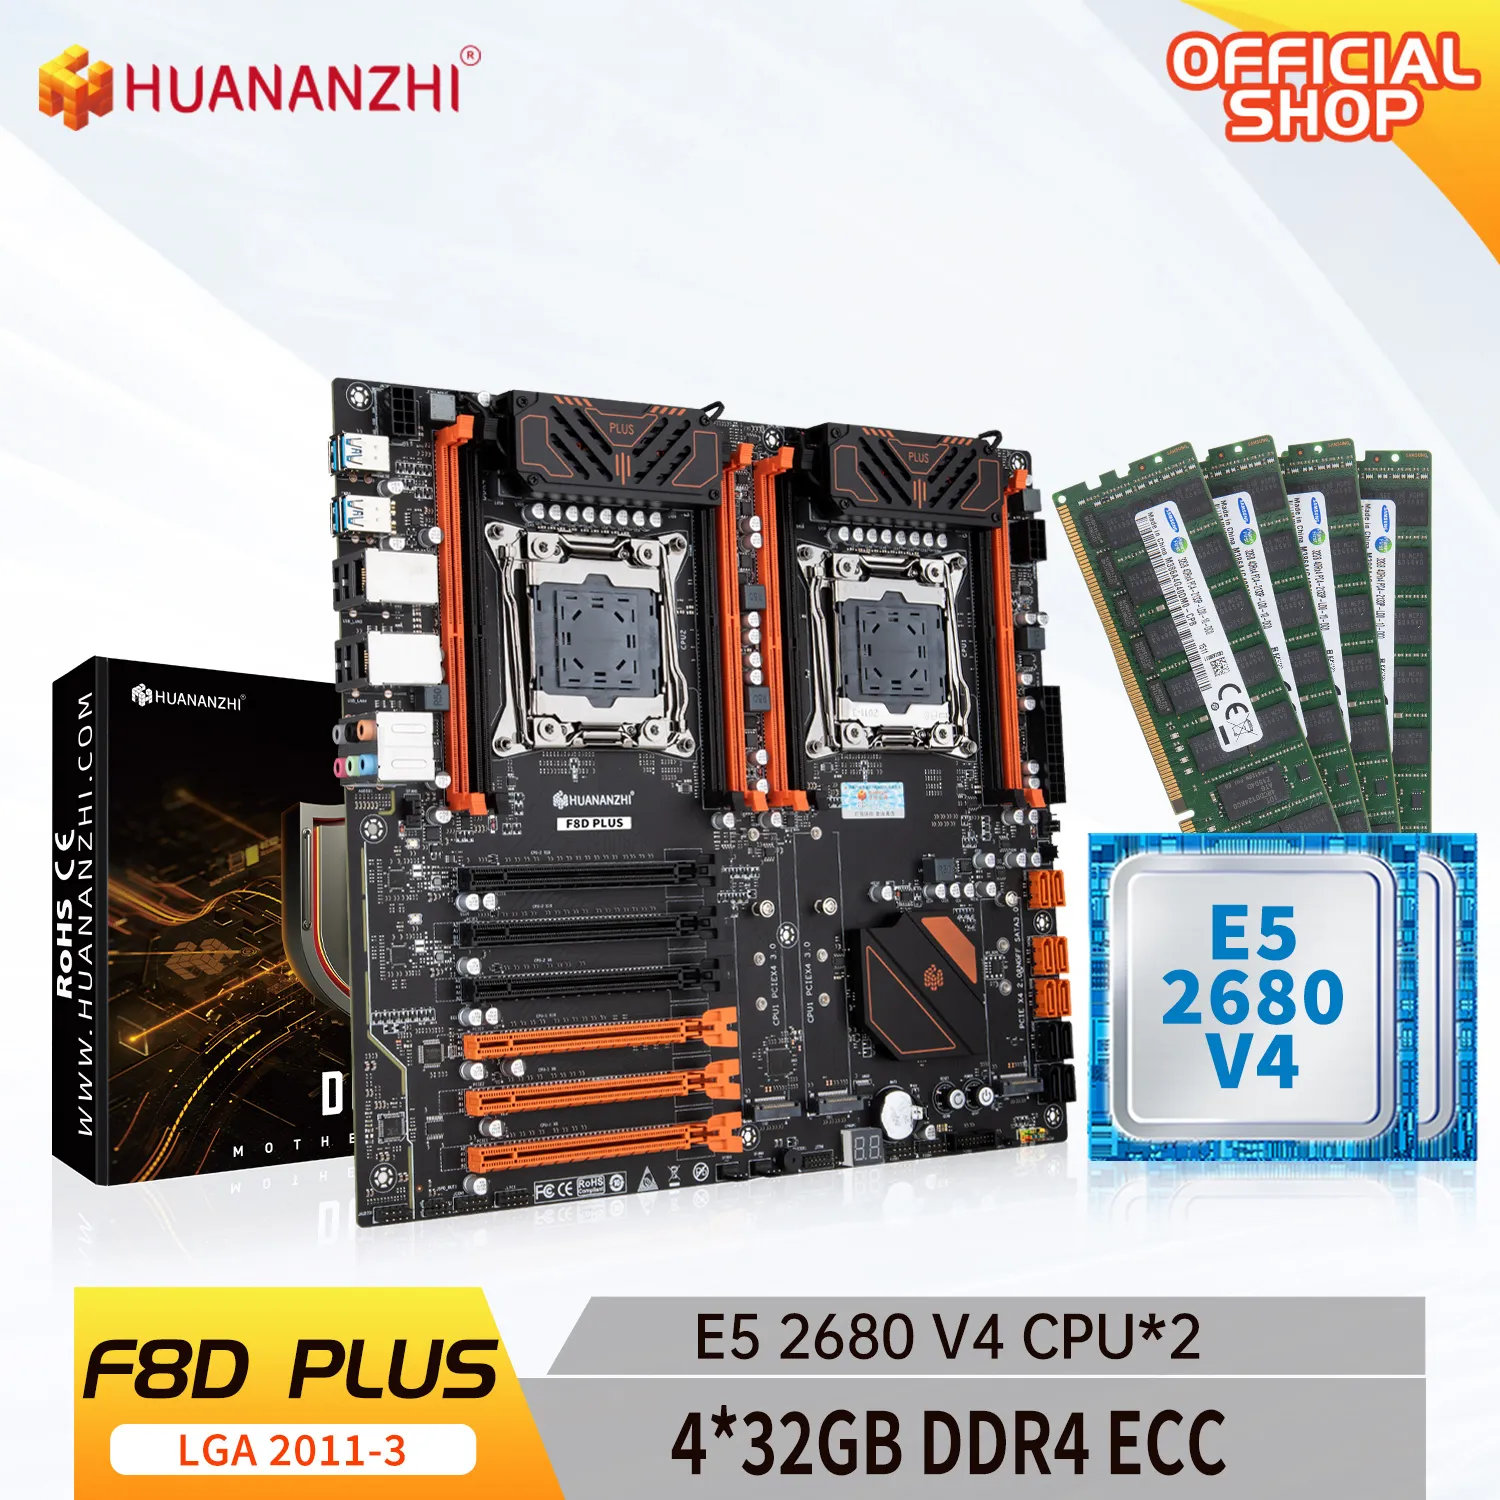 HUANANZHI X99 F8D PLUS LGA 2011-3 XEON X99 материнская плата с Intel E5 2680 V4 * 2 с 4*32G DDR4 RECC память комбинированный комплект